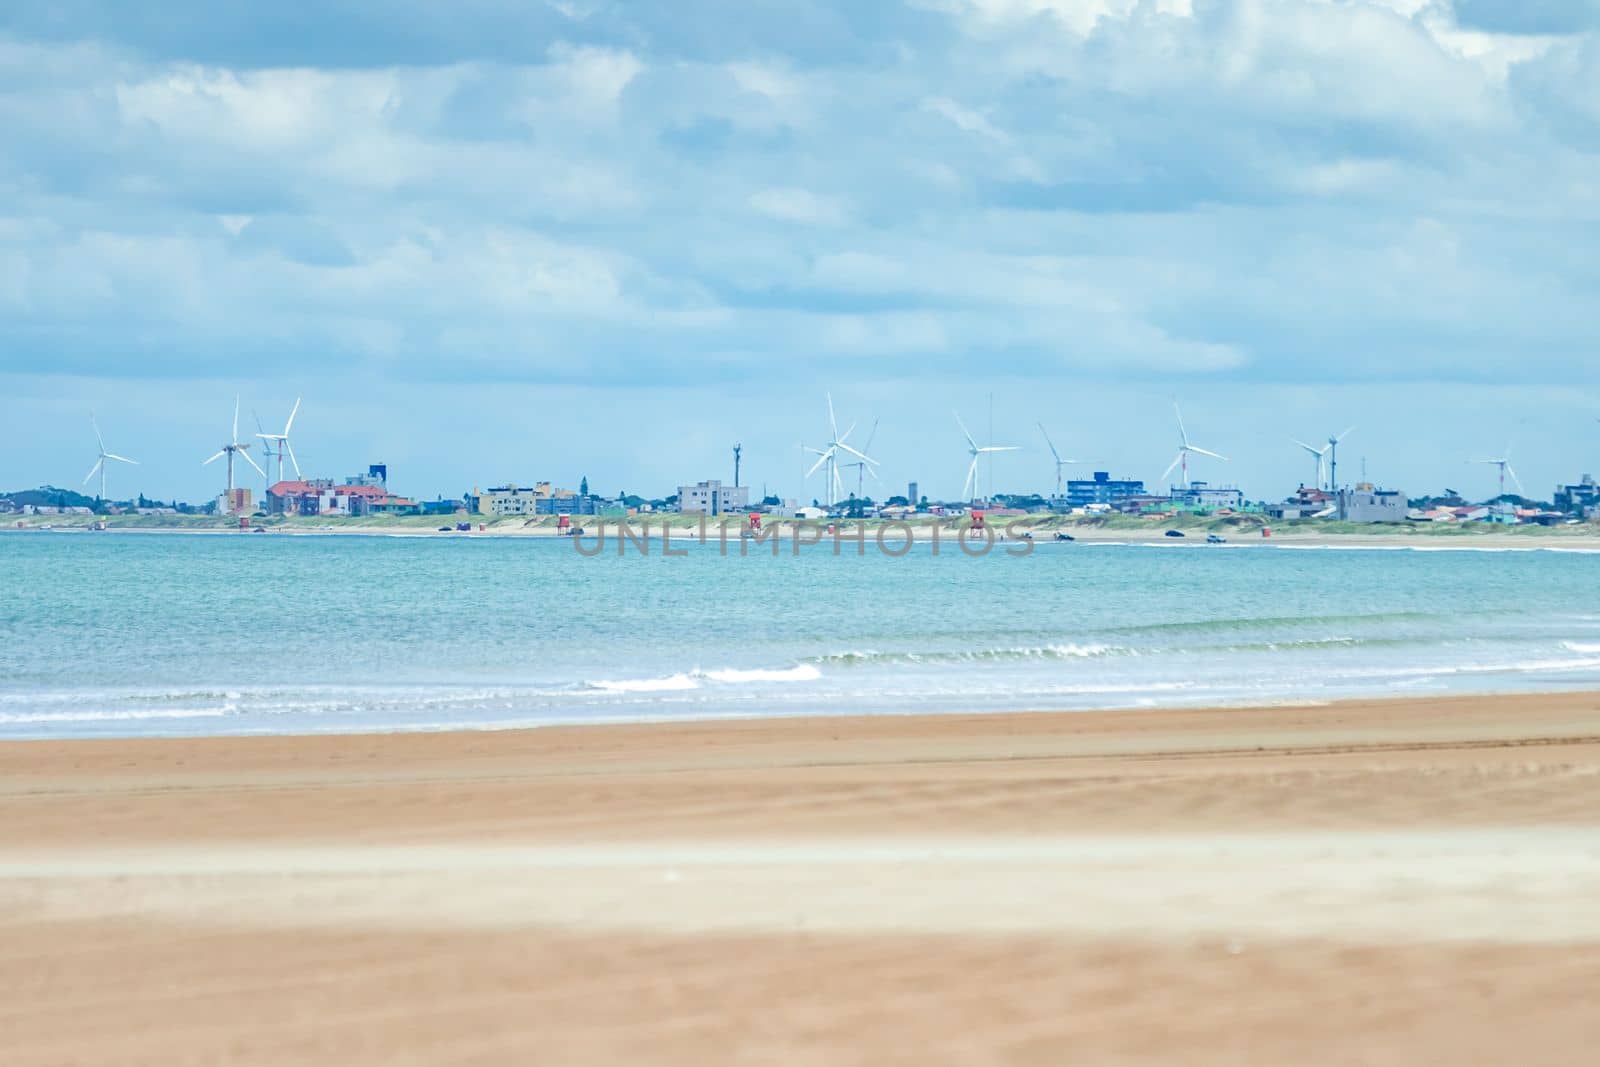 Casino beach, world's longest sea sandy beach.